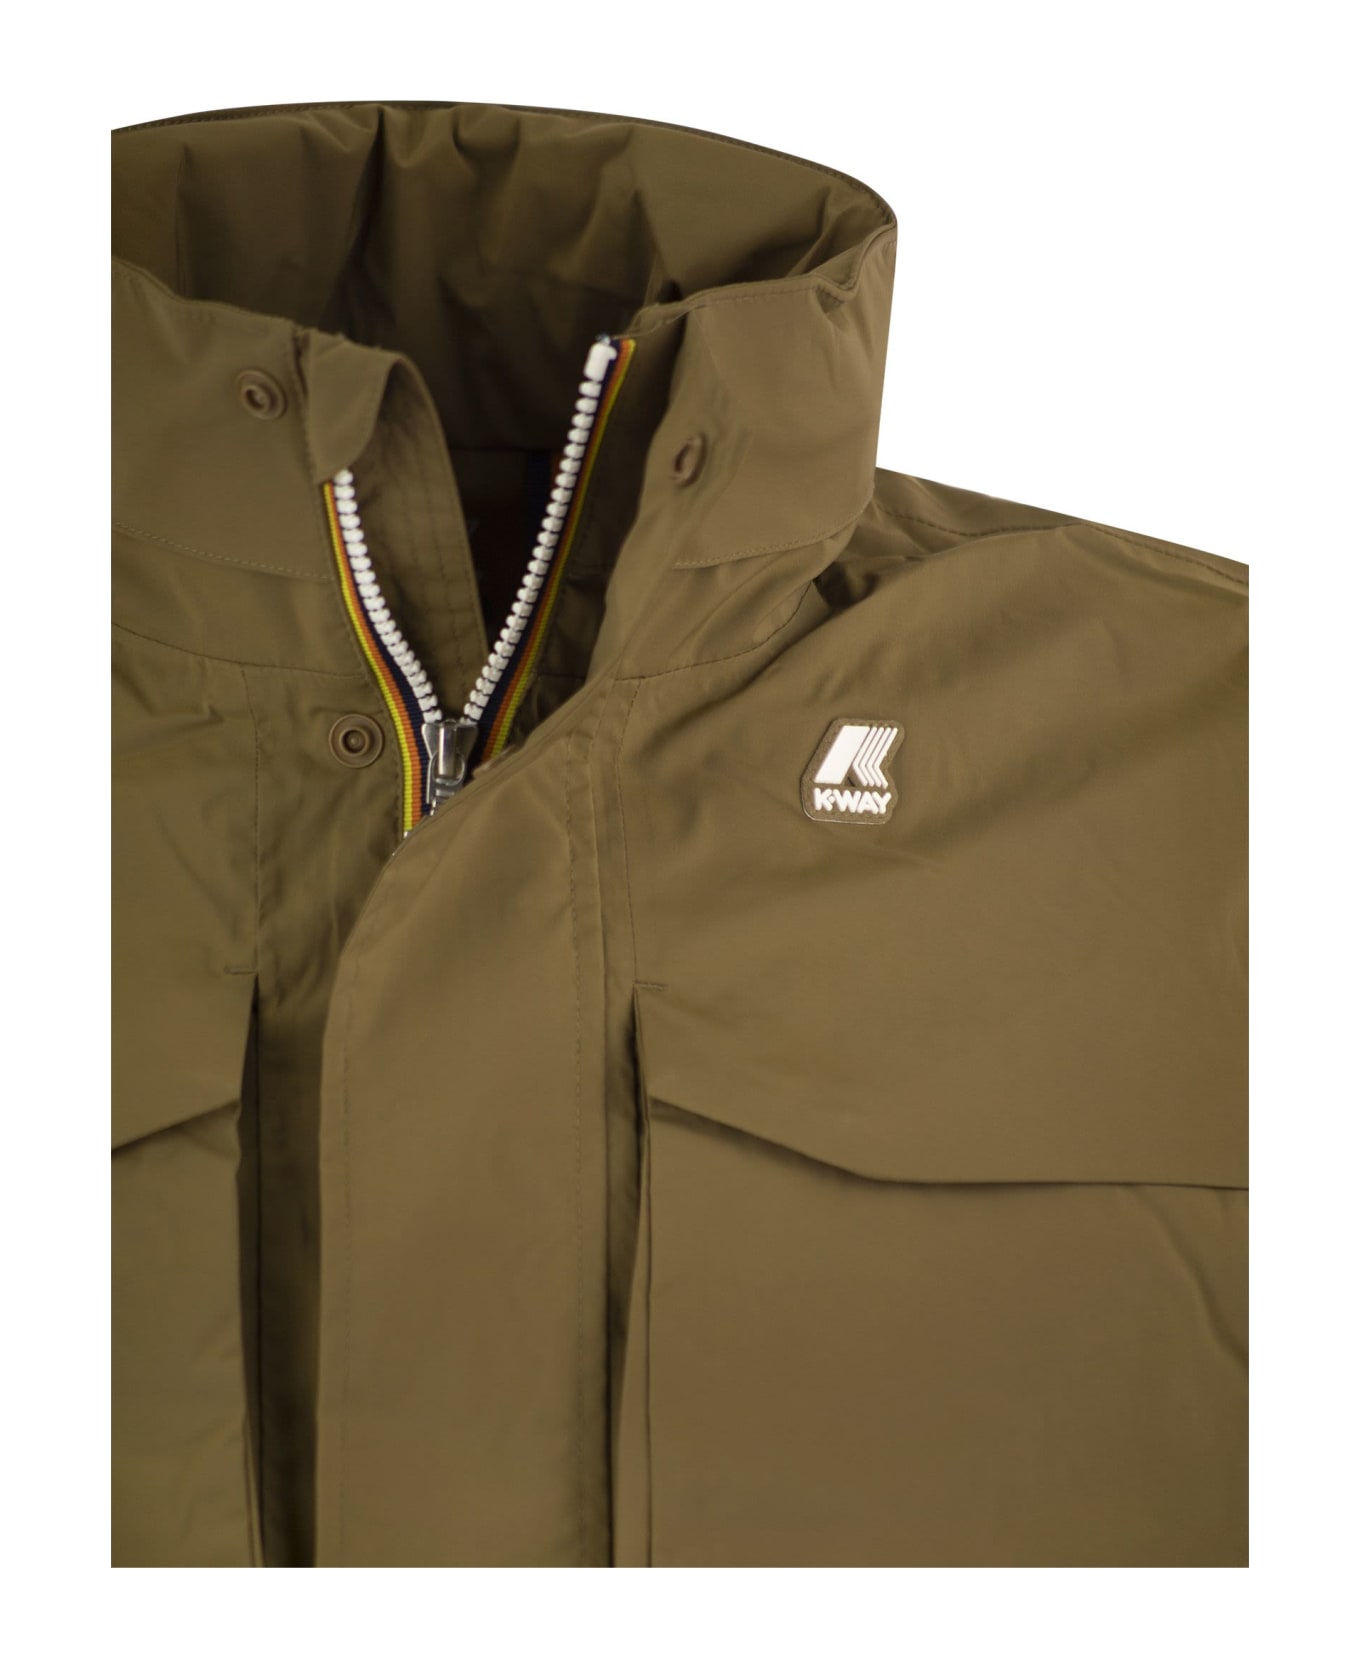 K-Way Manfield Jacket In Waterproof Fabric - Rope ジャケット